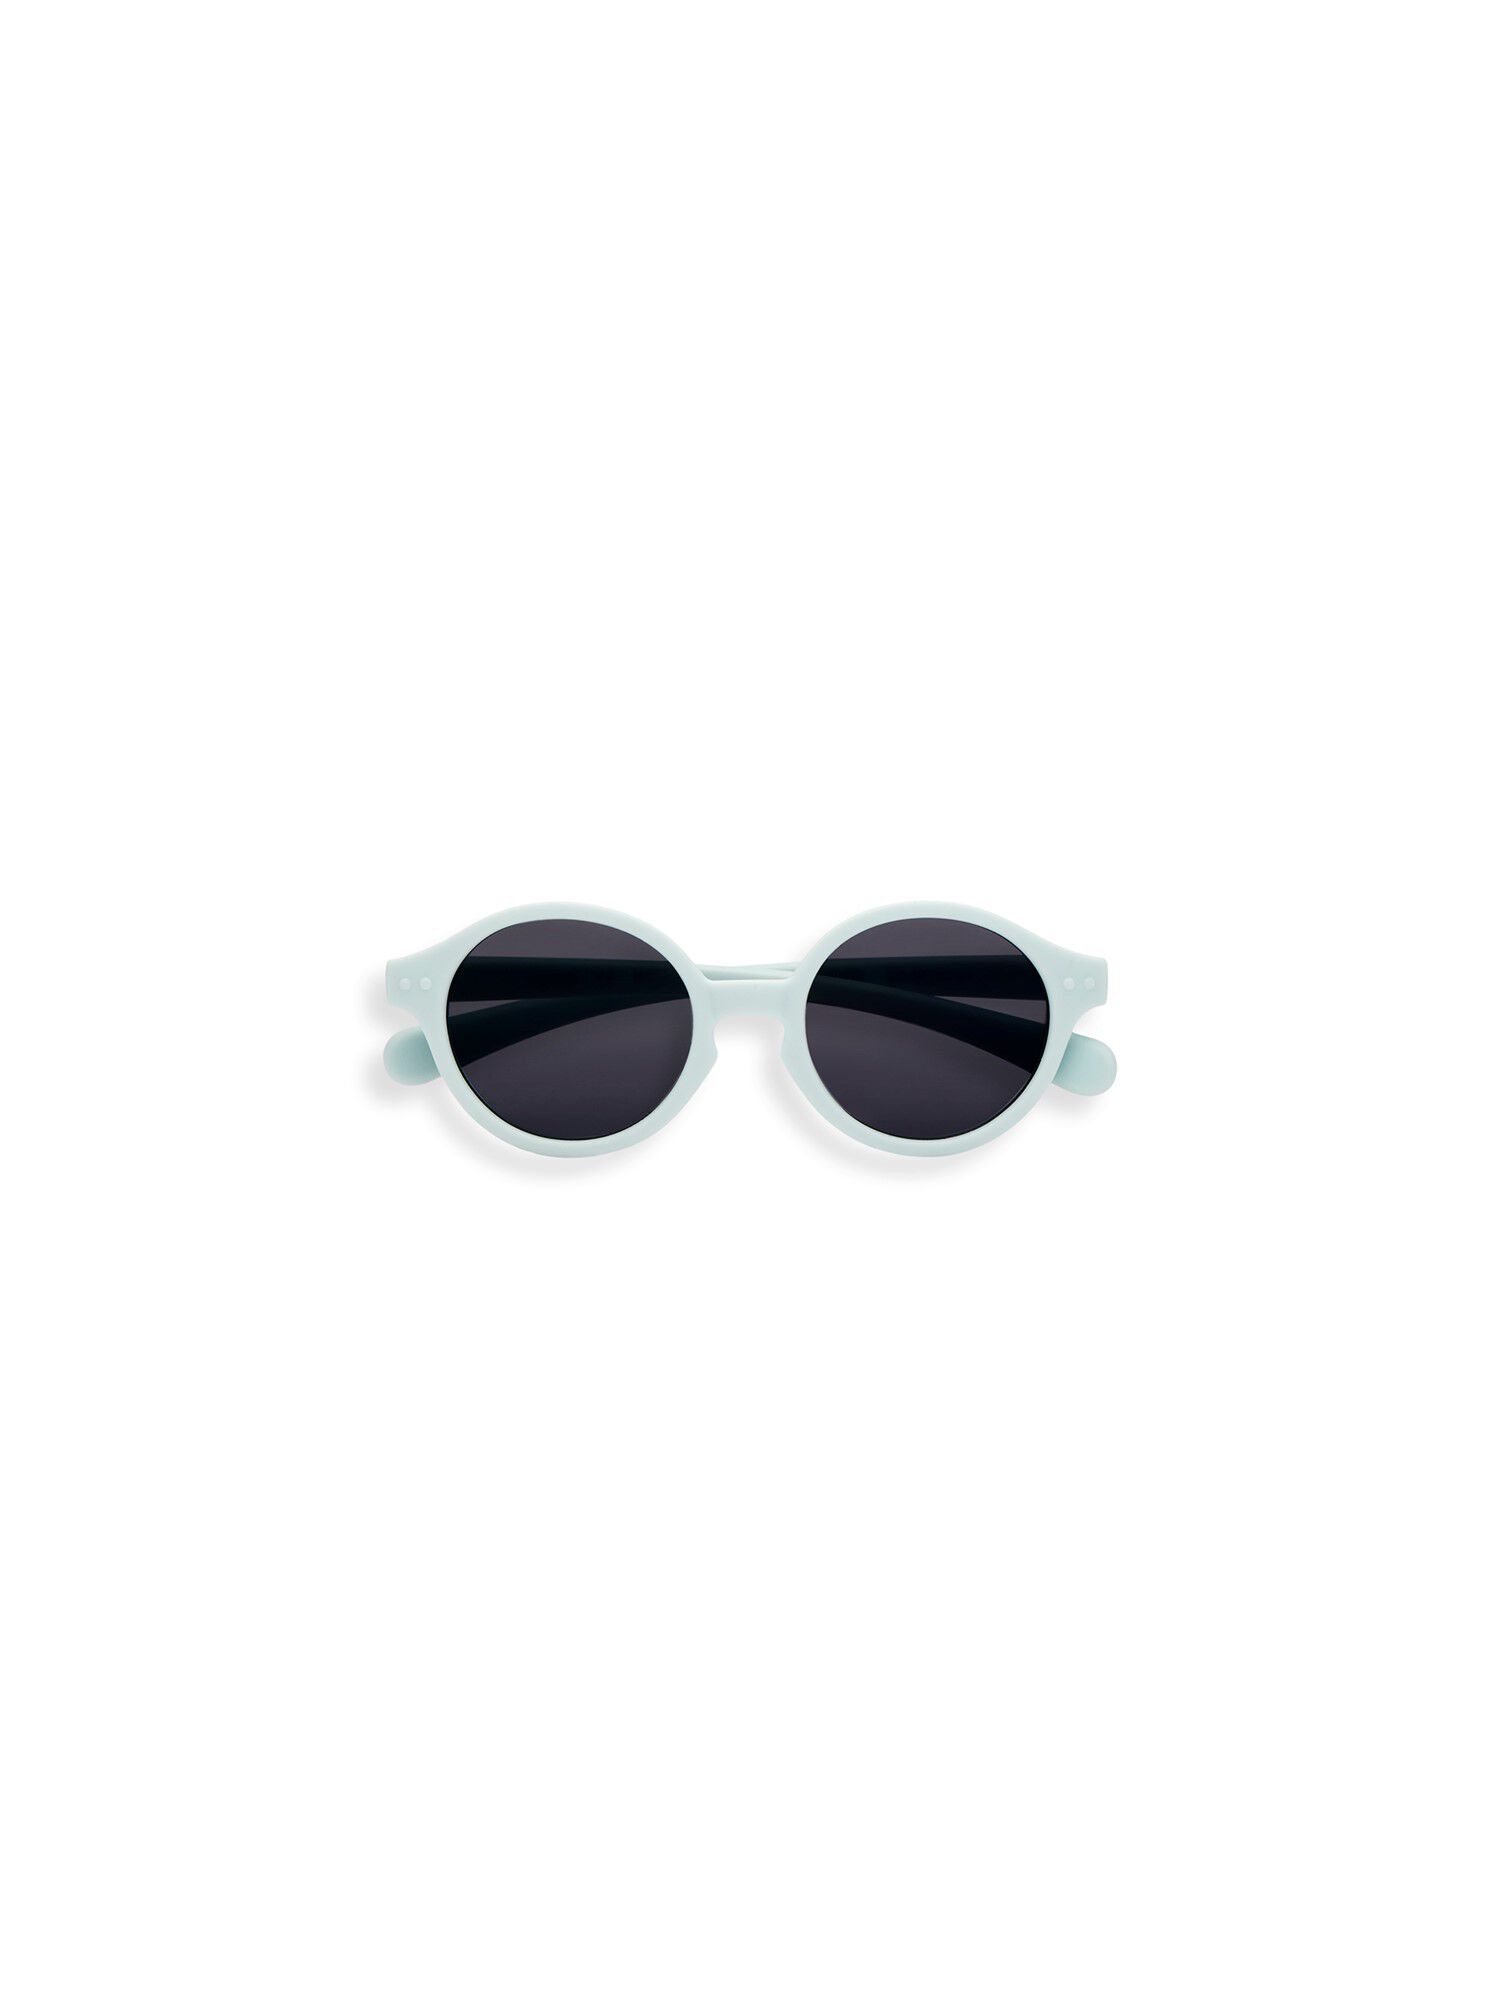 Black/Gray Frame Smoke Tinted Lenses Obyki Super Monkey Youth Sunglasses 